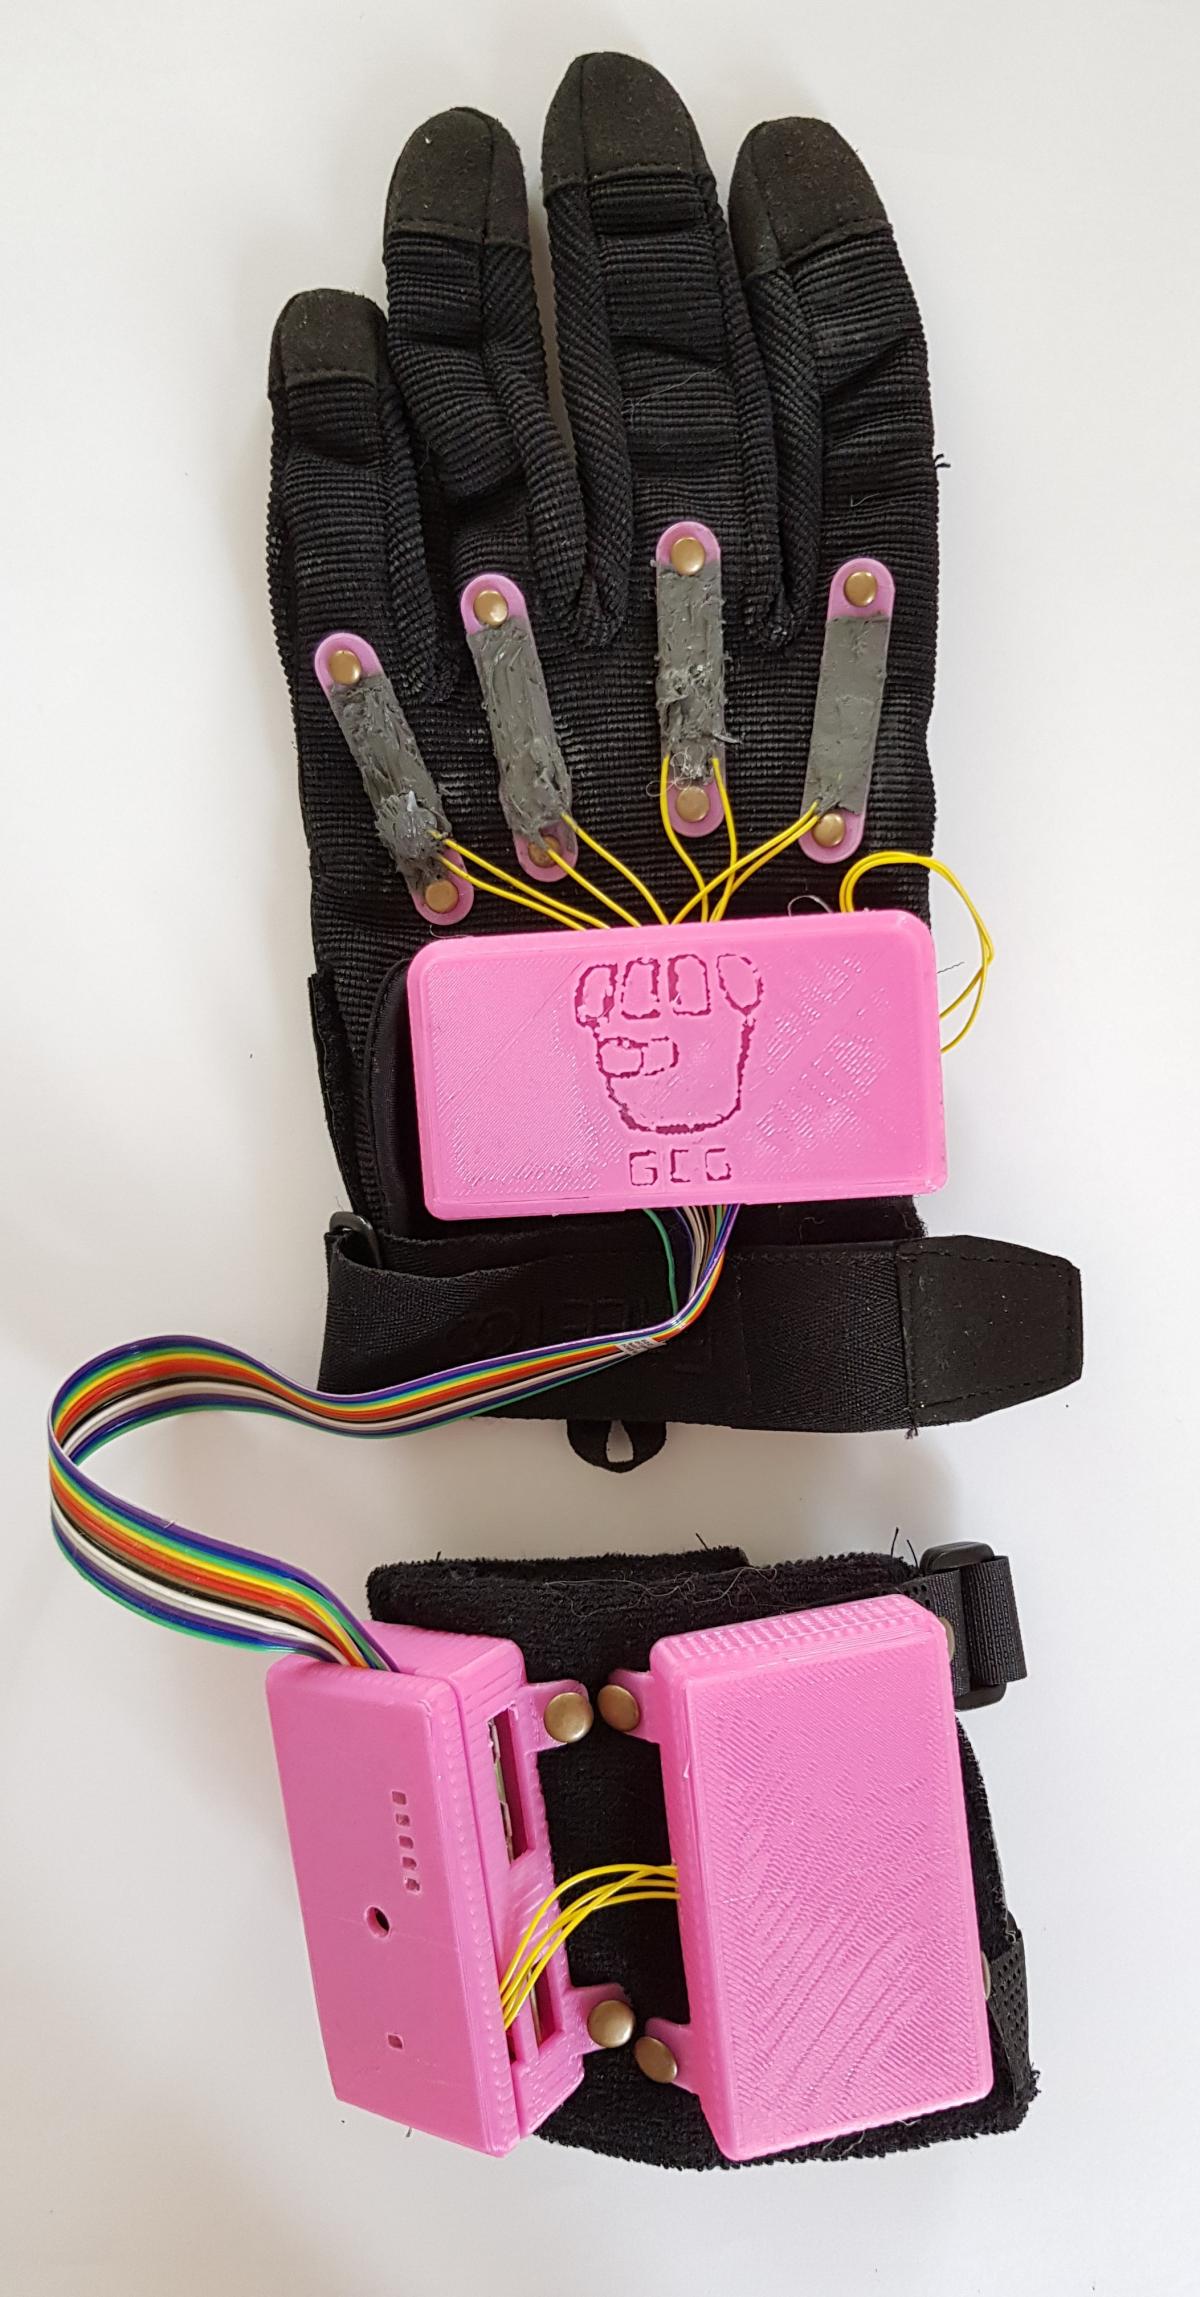 Mechatronik Gesture Control Glove